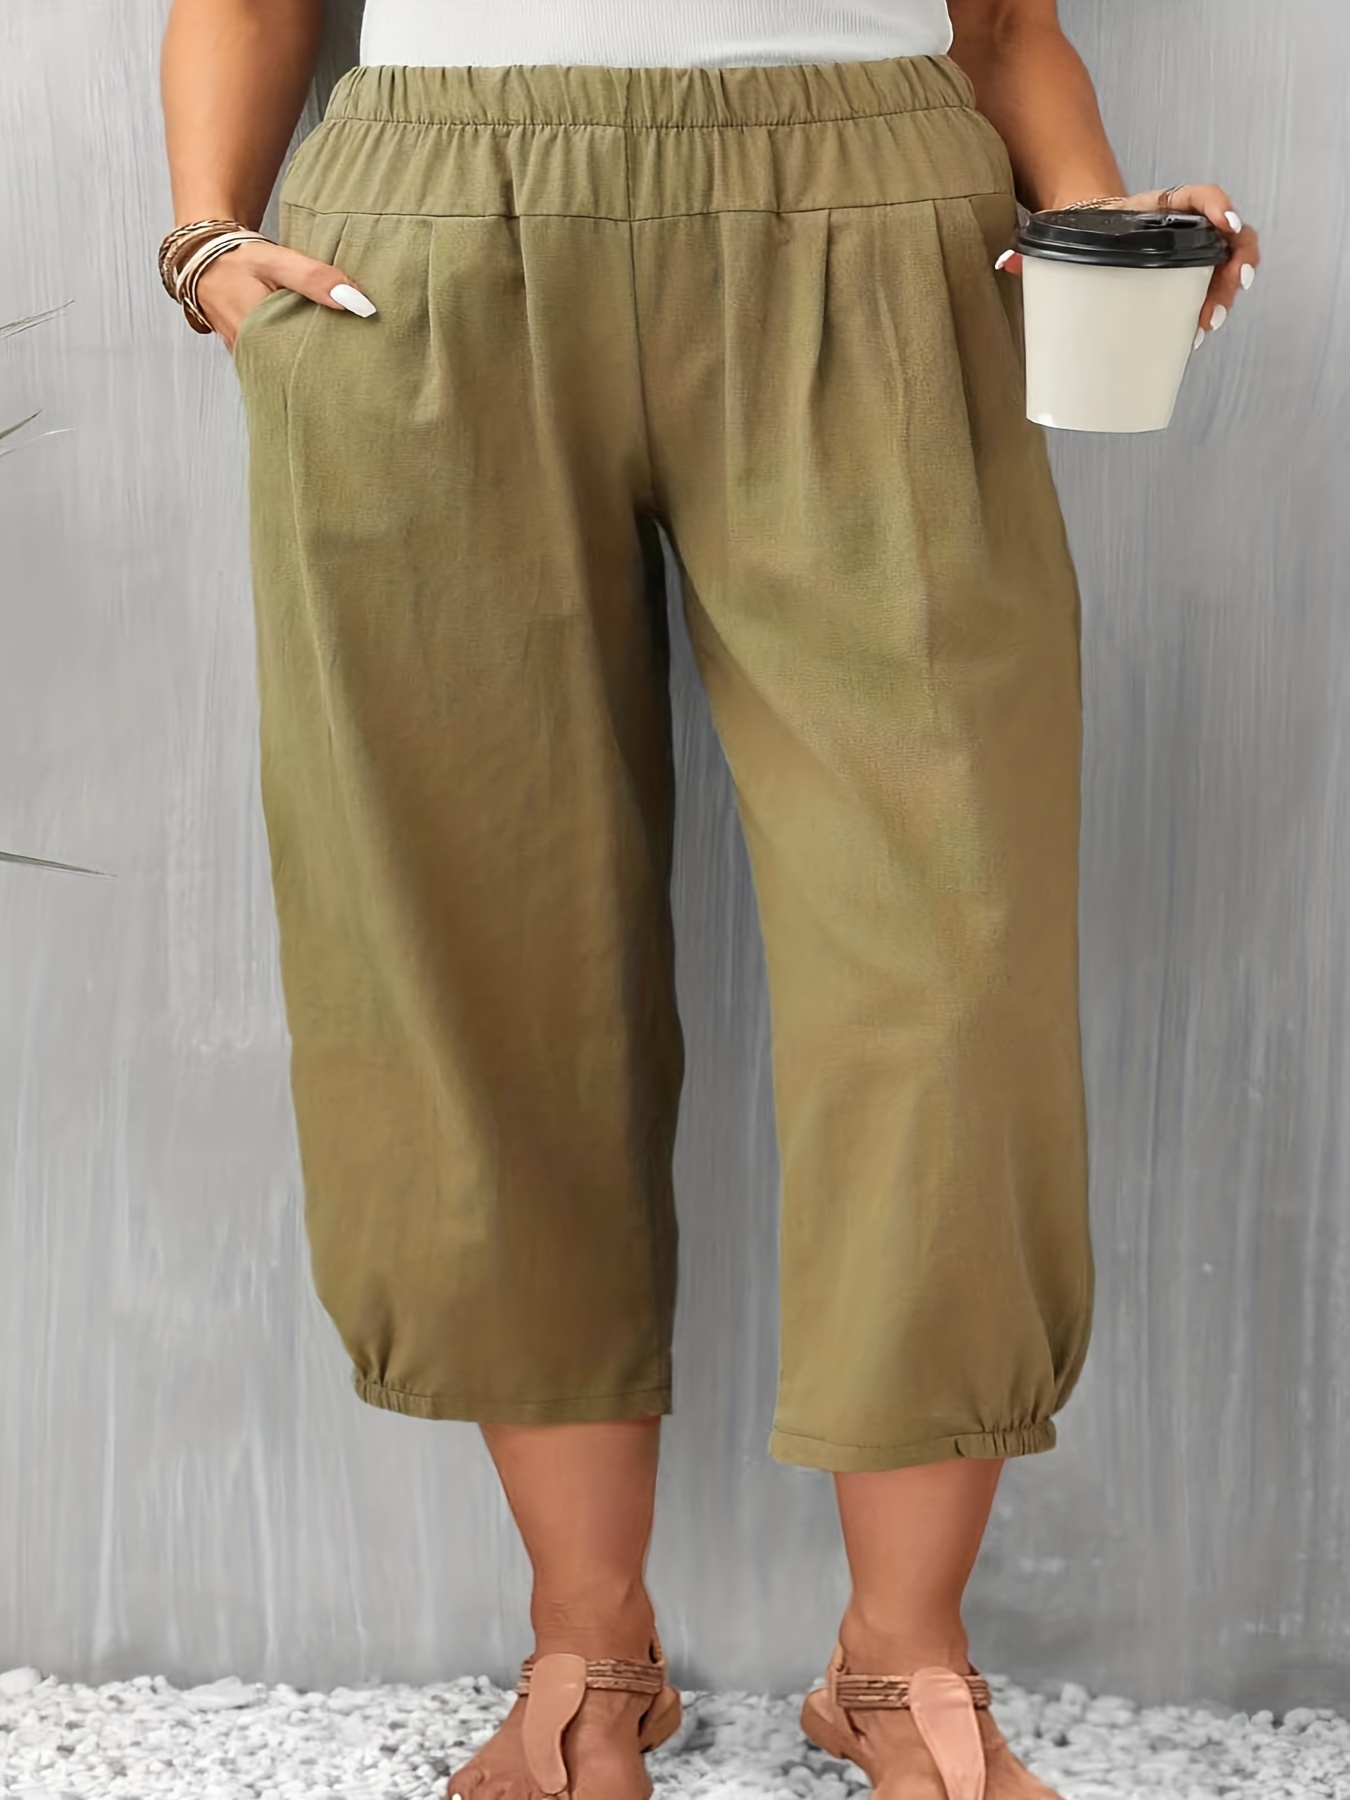  QWENTMTNTY Plus Size Capris Pants for Women Cotton Linen Wide  Leg Casual Summer Comfy High Waisted Loose Crop Pants Pockets : Sports &  Outdoors